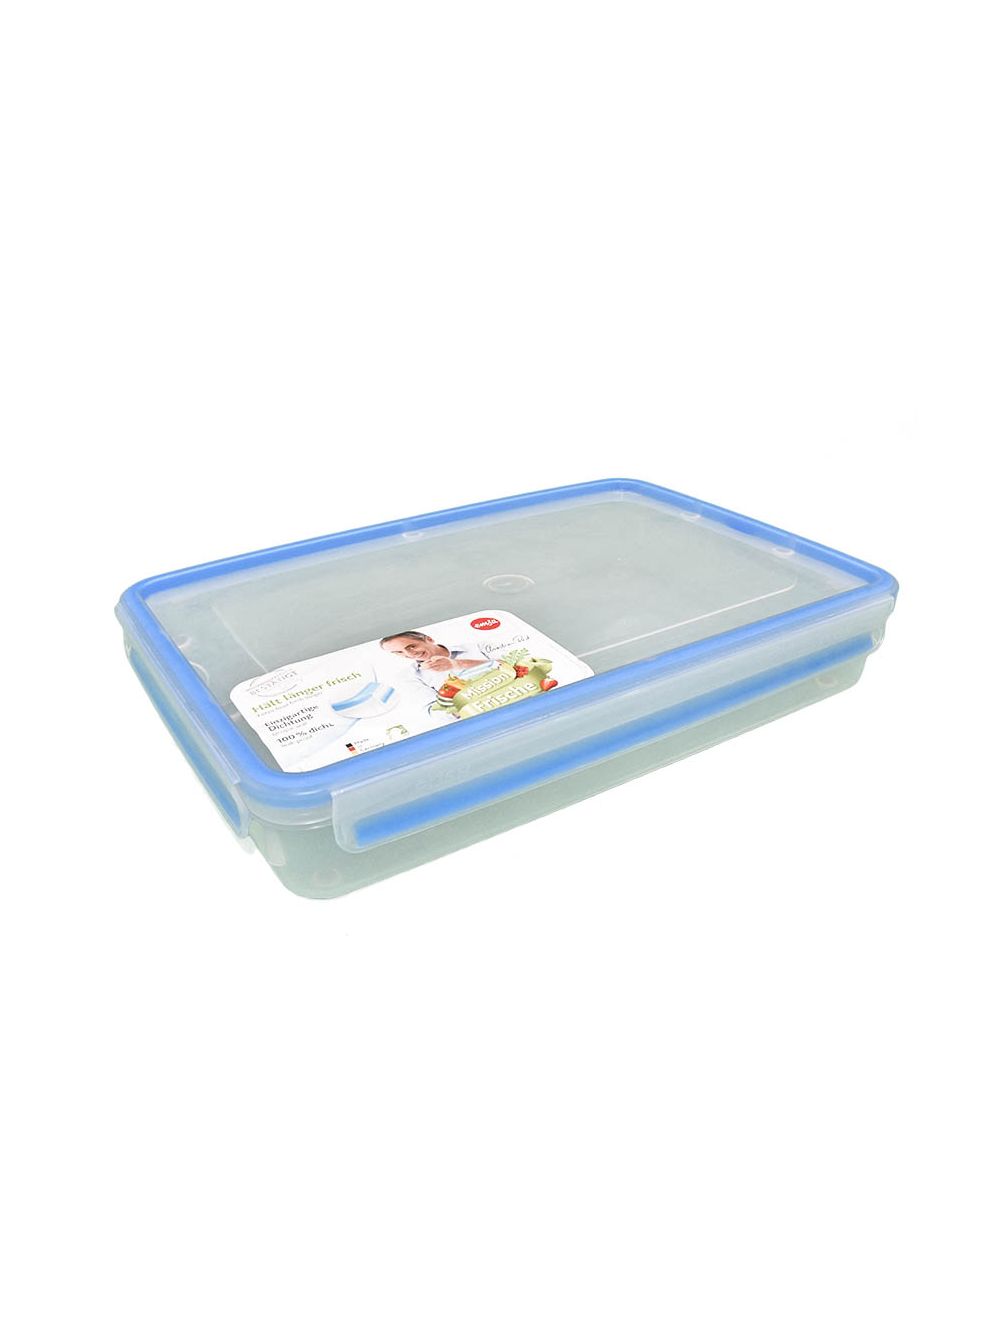 Clip & Close Rectangular Food Storage Container With Lid - Transparent/Blue 2.6L